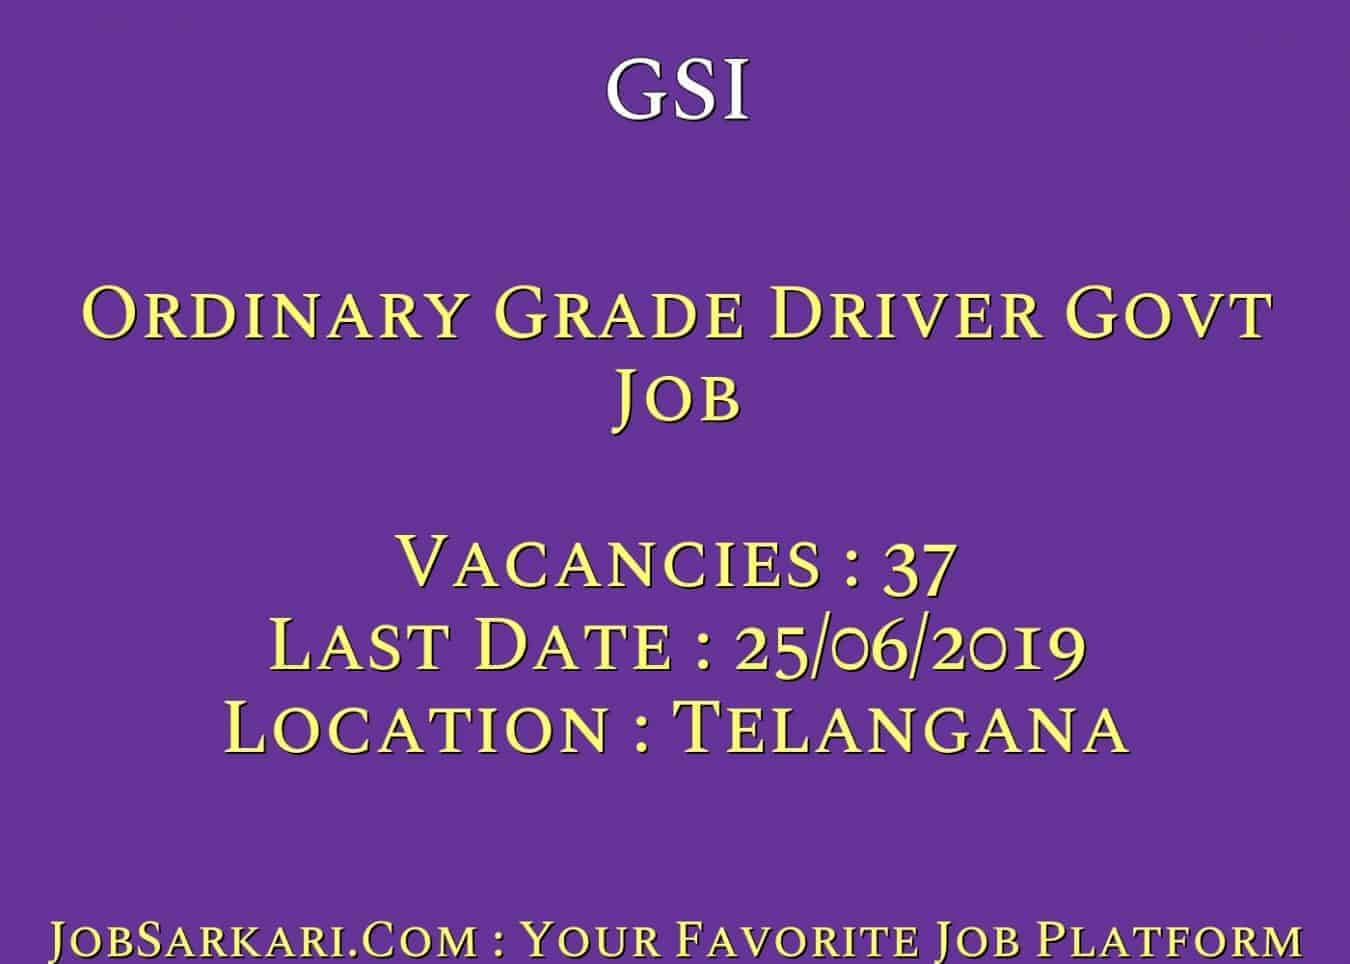 GSI Recruitment 2019 For Ordinary Grade Driver Govt Job